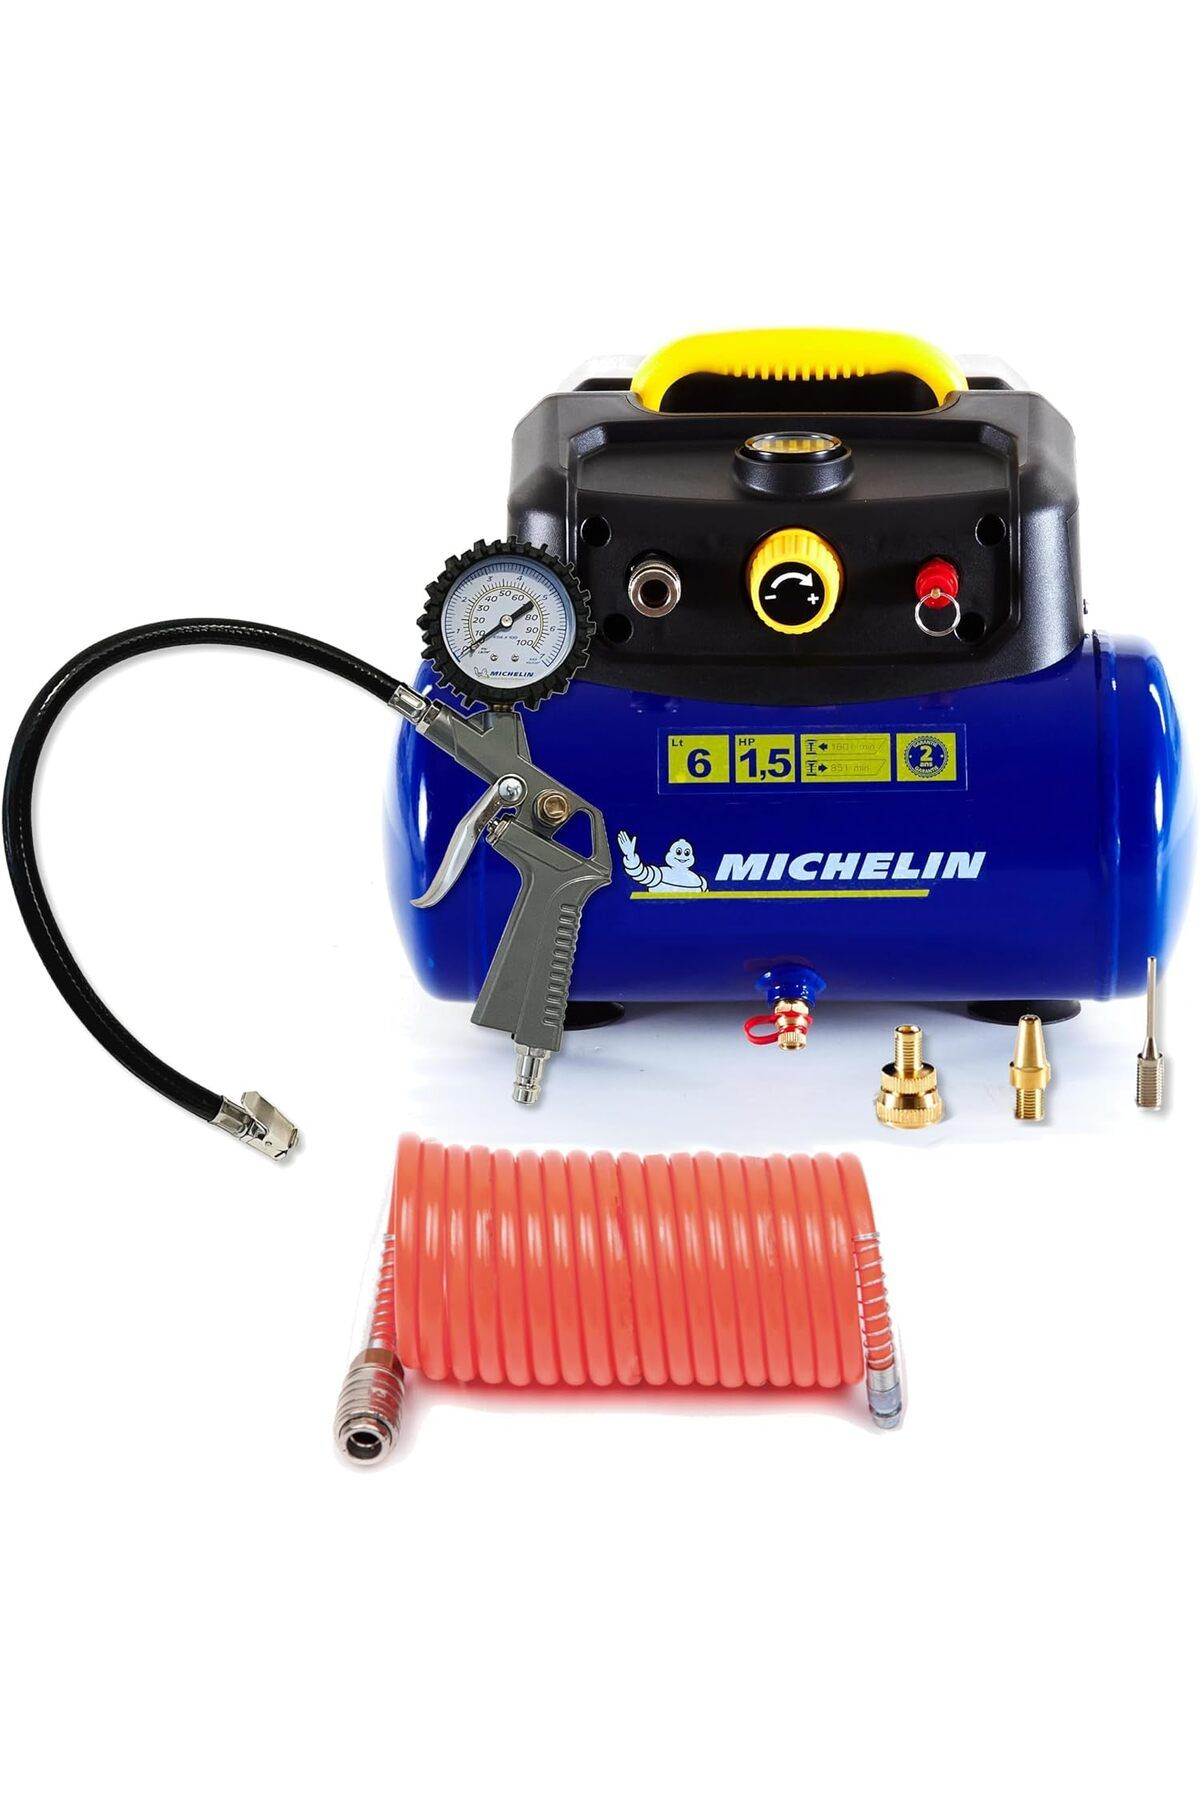 Michelin MBL6 taşınabilir hava kompresörü, 6 litre yağsız hava kompresörü + kit